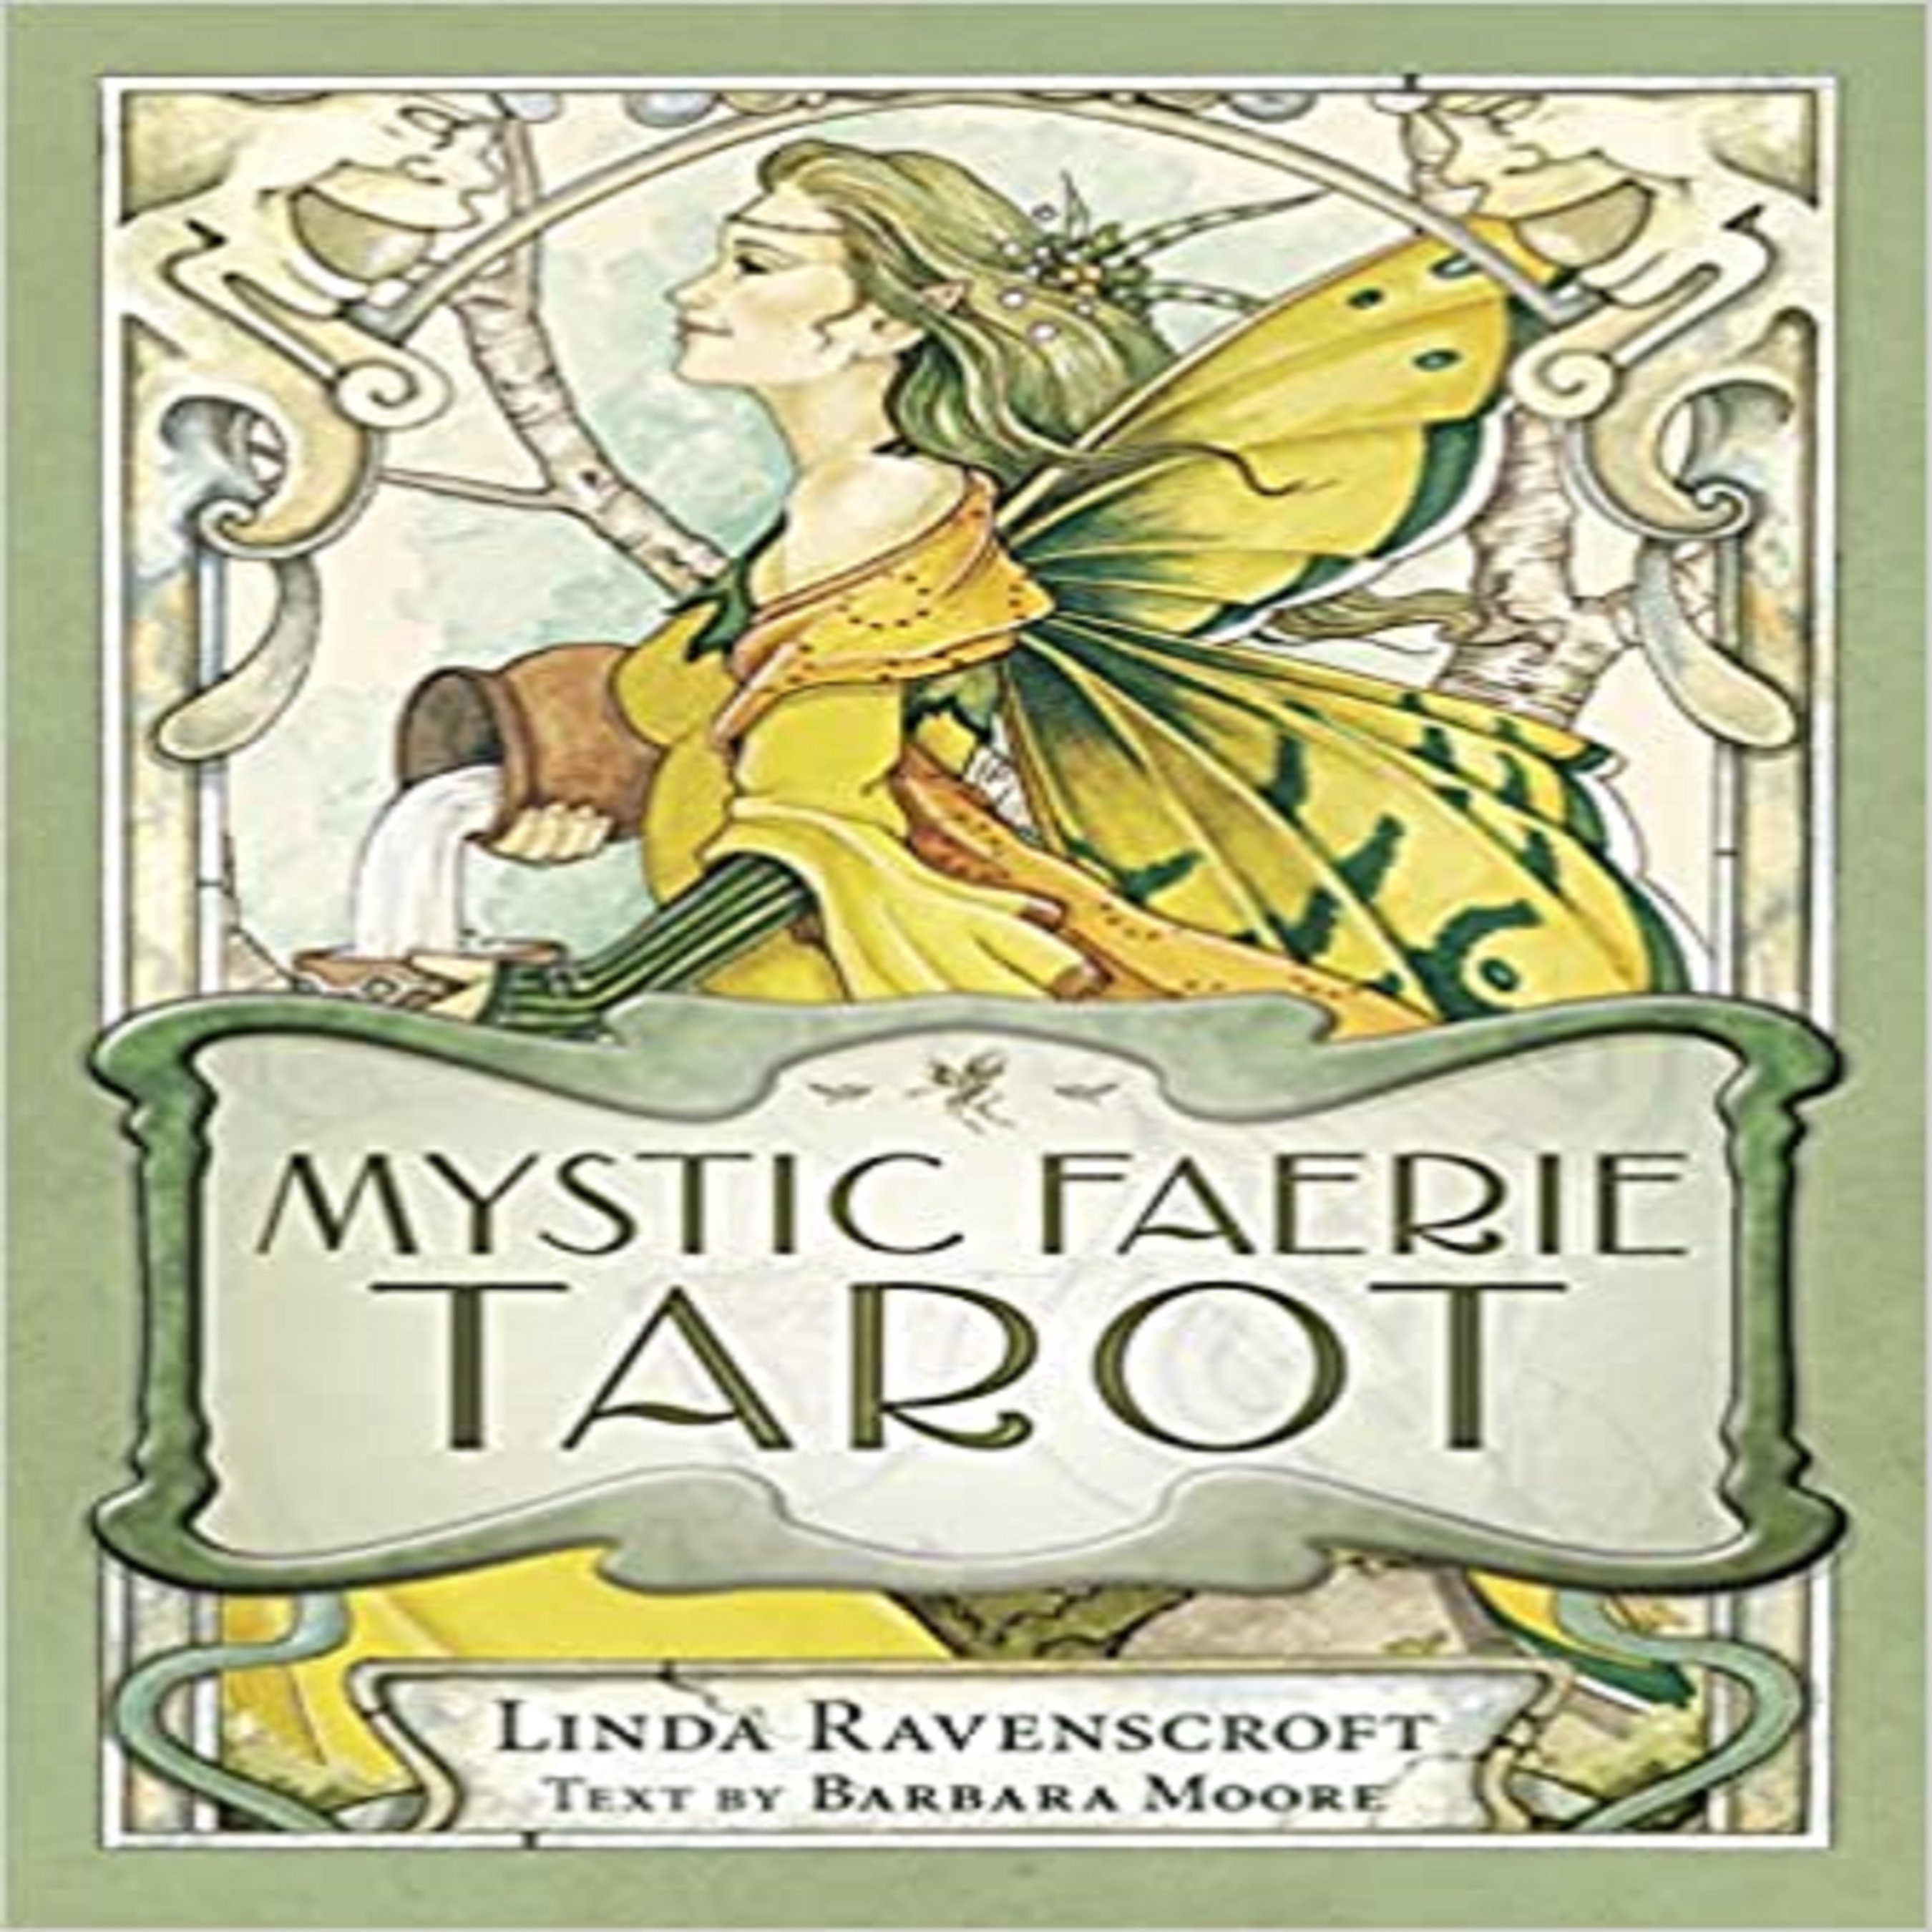 Mystic Faerie Tarot - YouTube